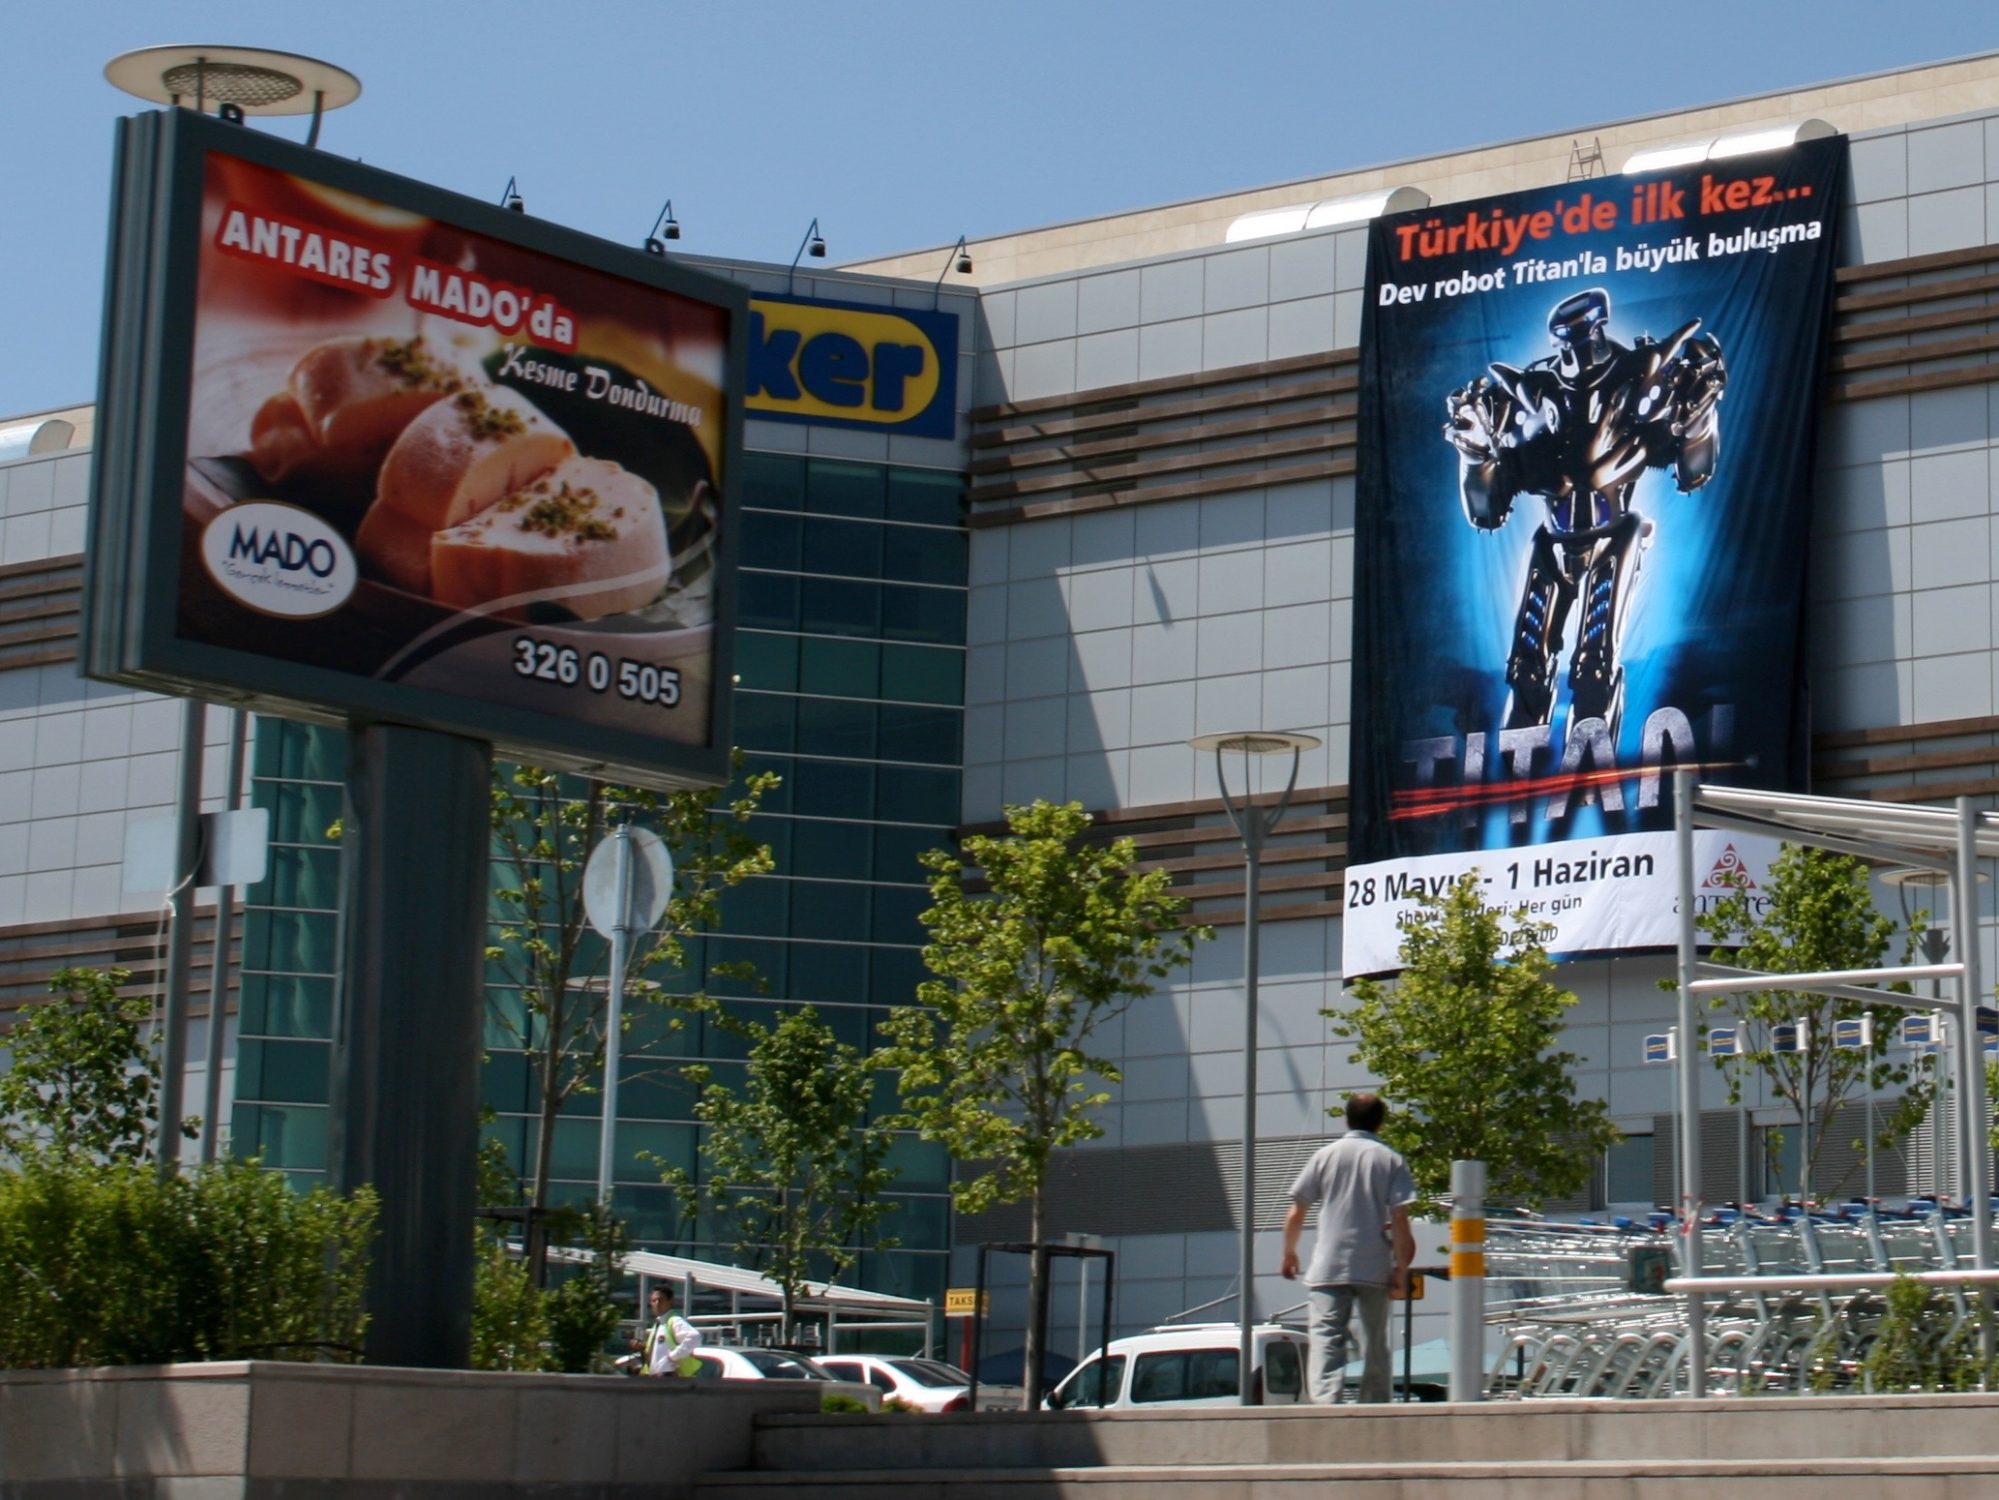 Giant billboard for Titan the Robot show in Ankara, Turkey